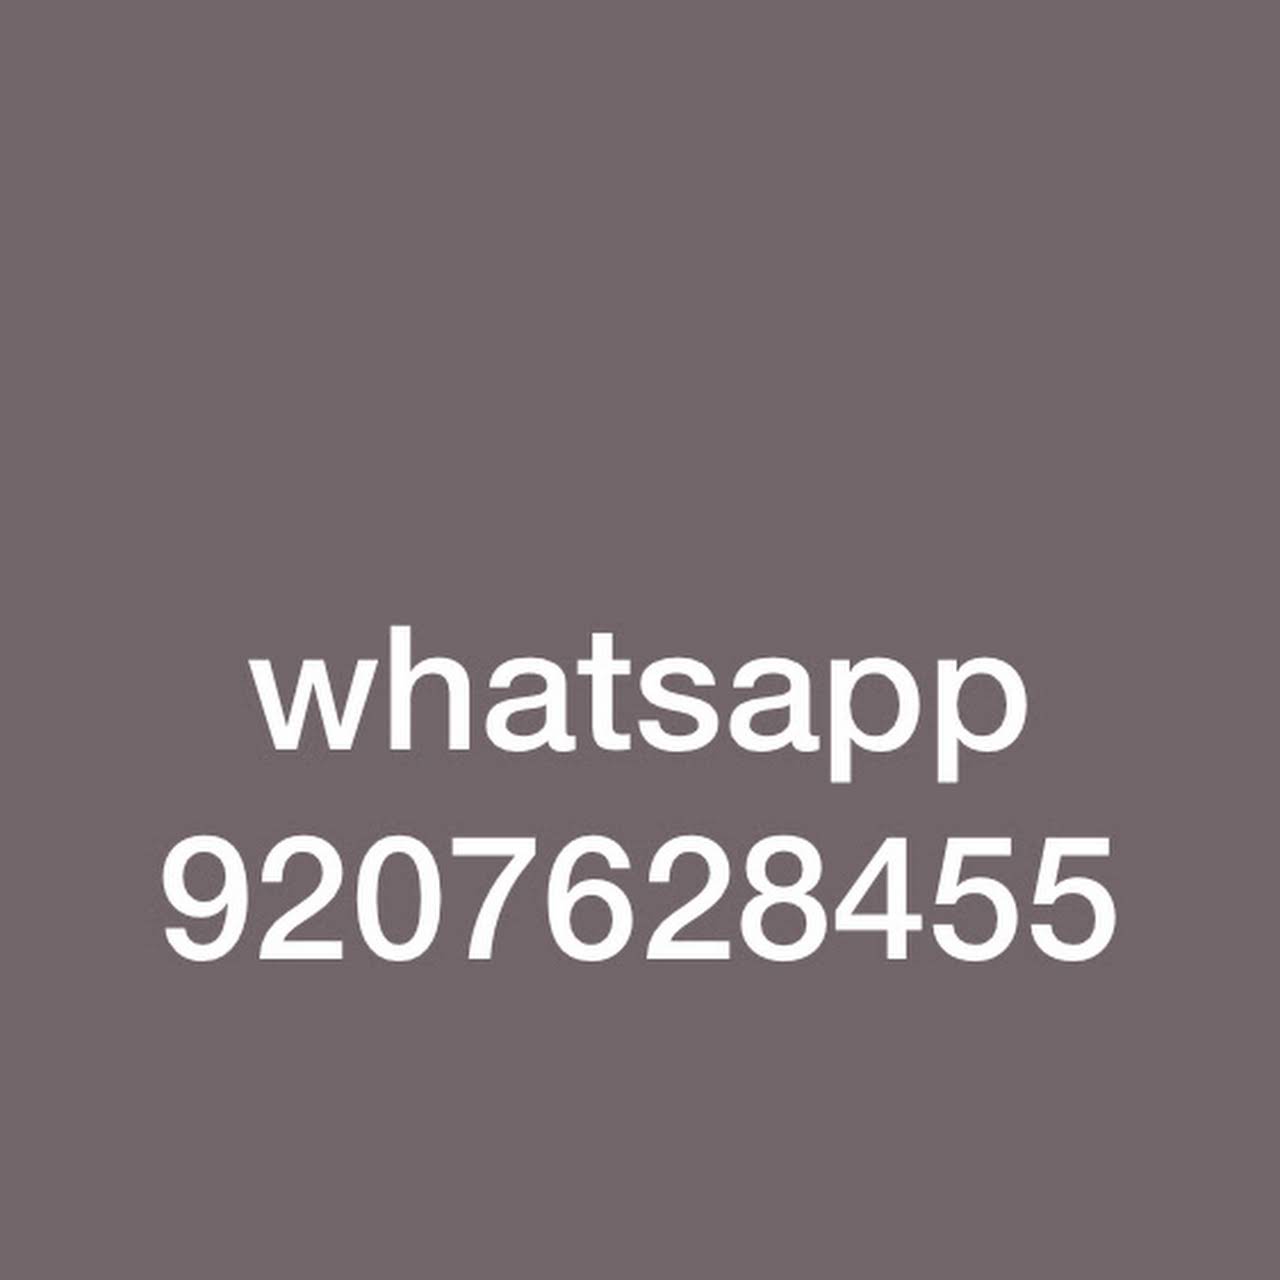 Dating contacts whatsapp Whatsapp Dating